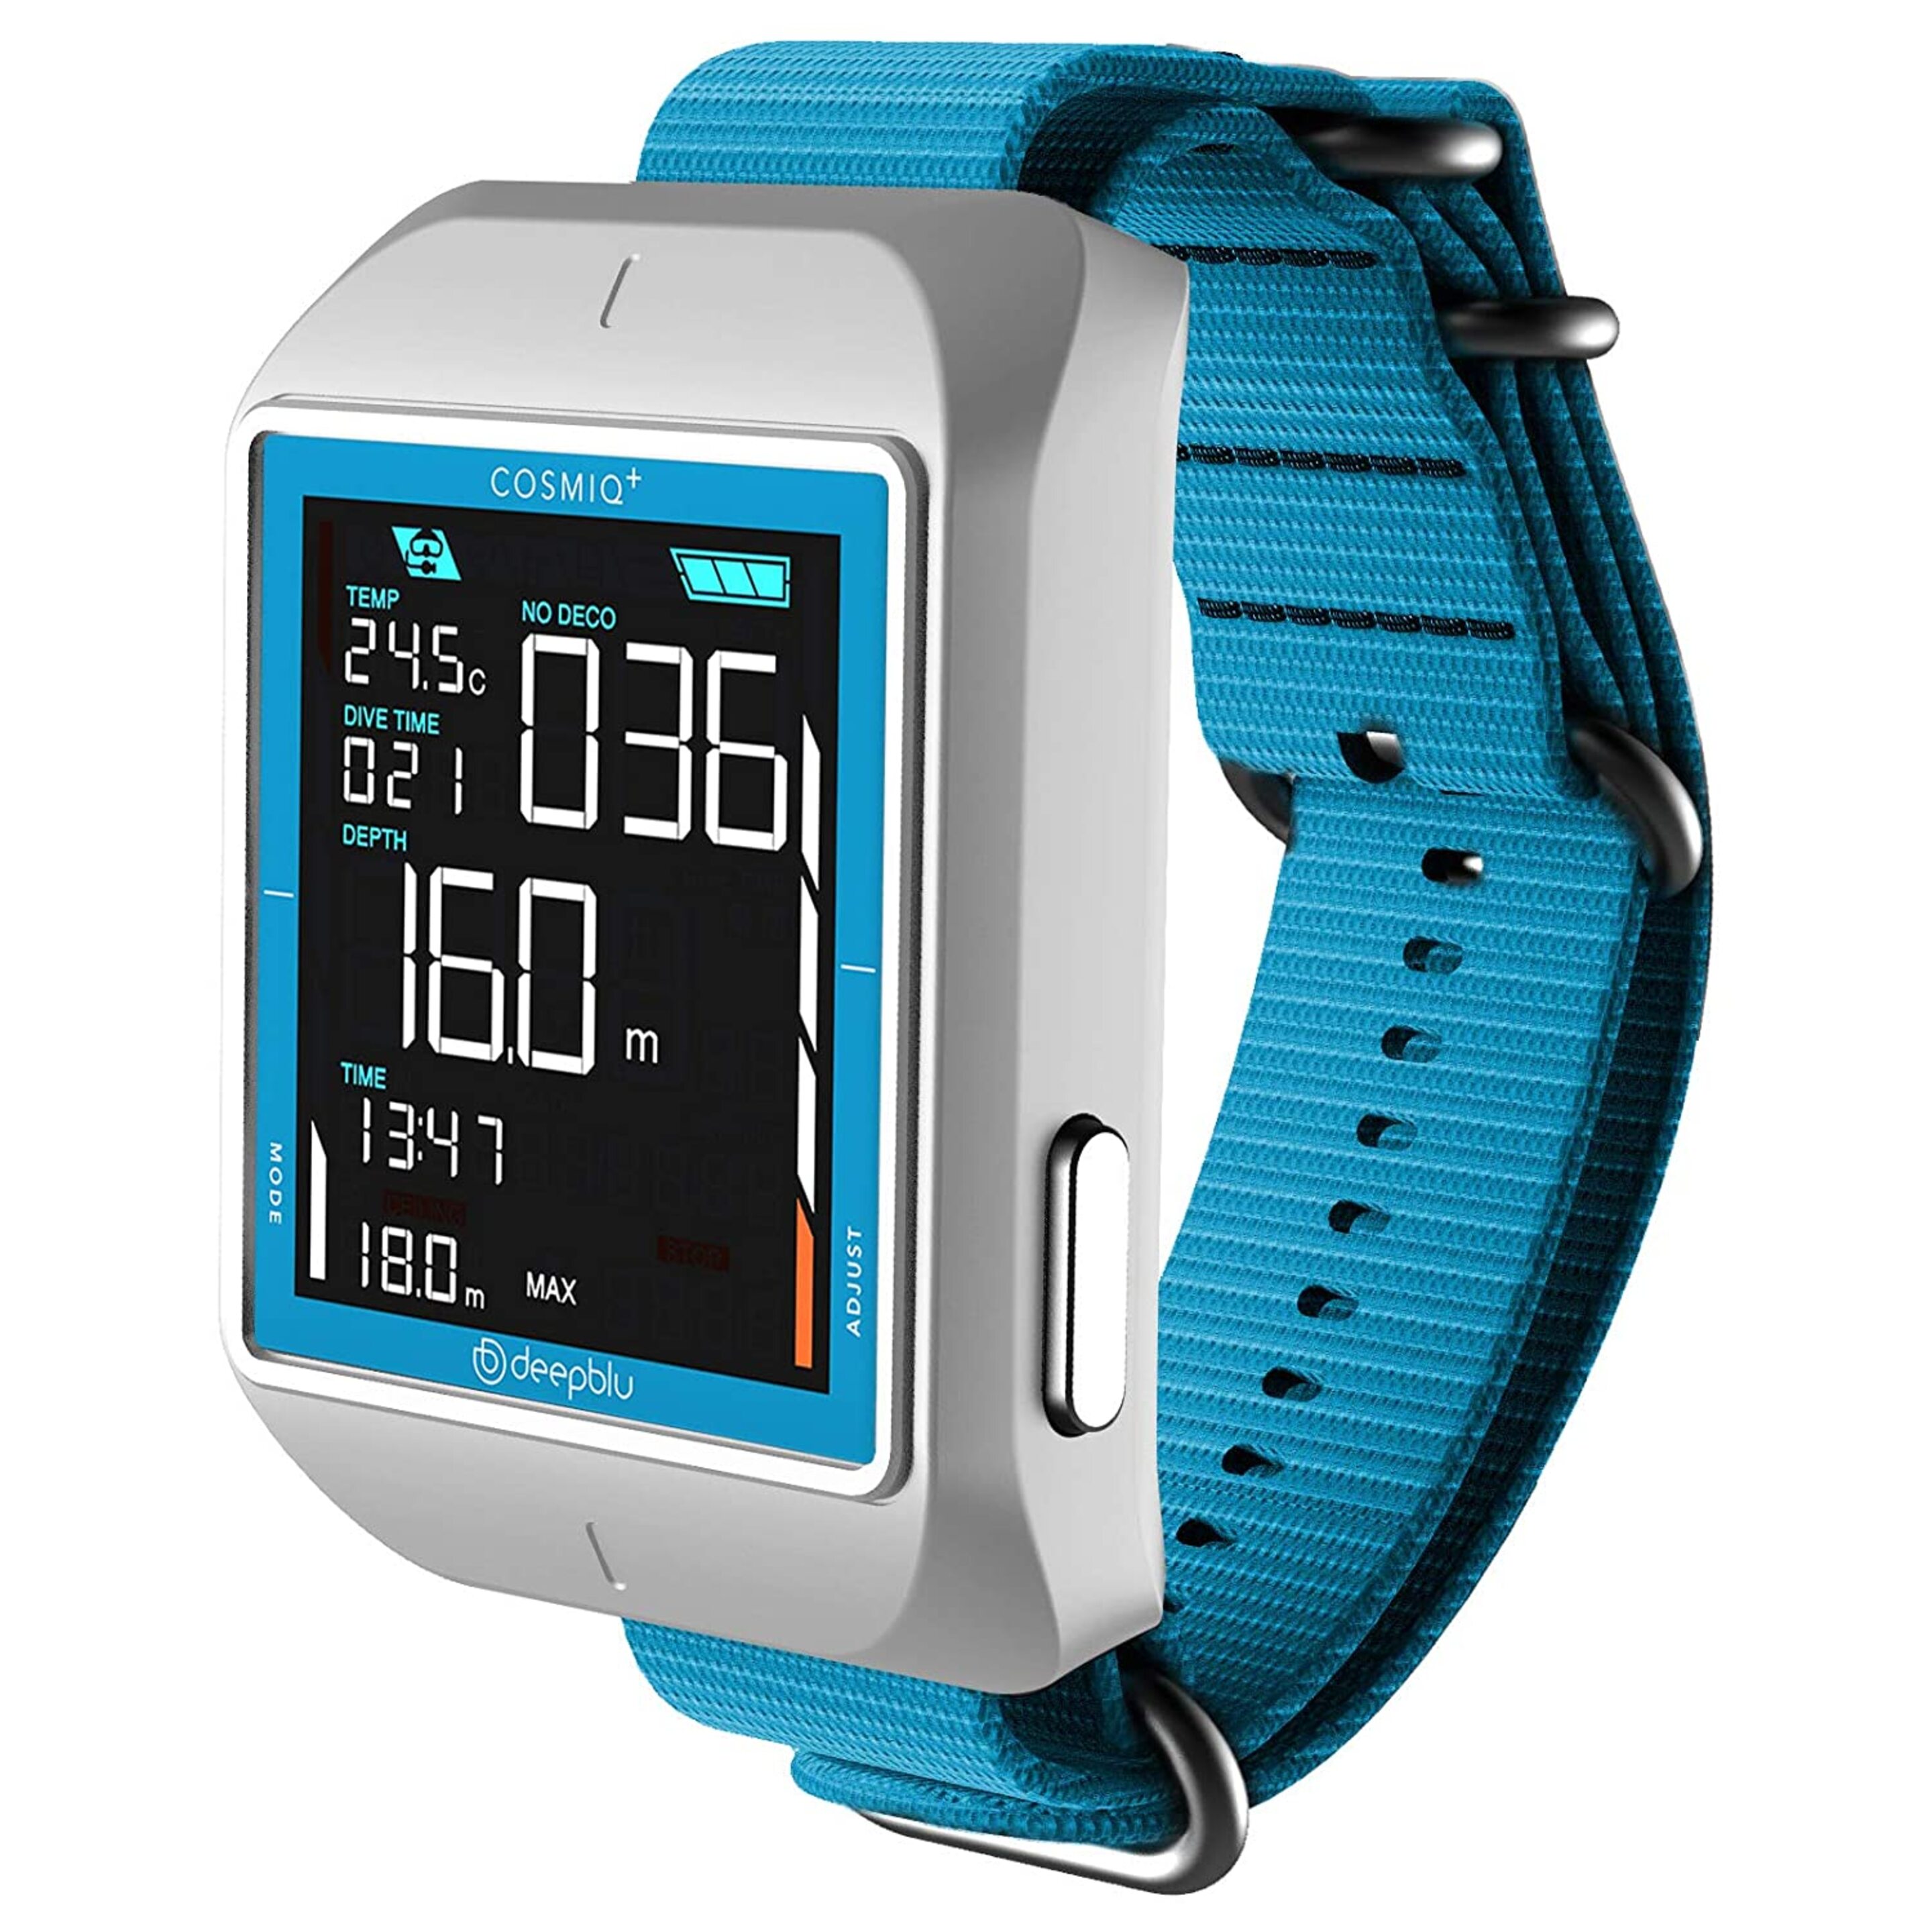 Smartwatch Buceo Deepblu Cosmiq - azul - 